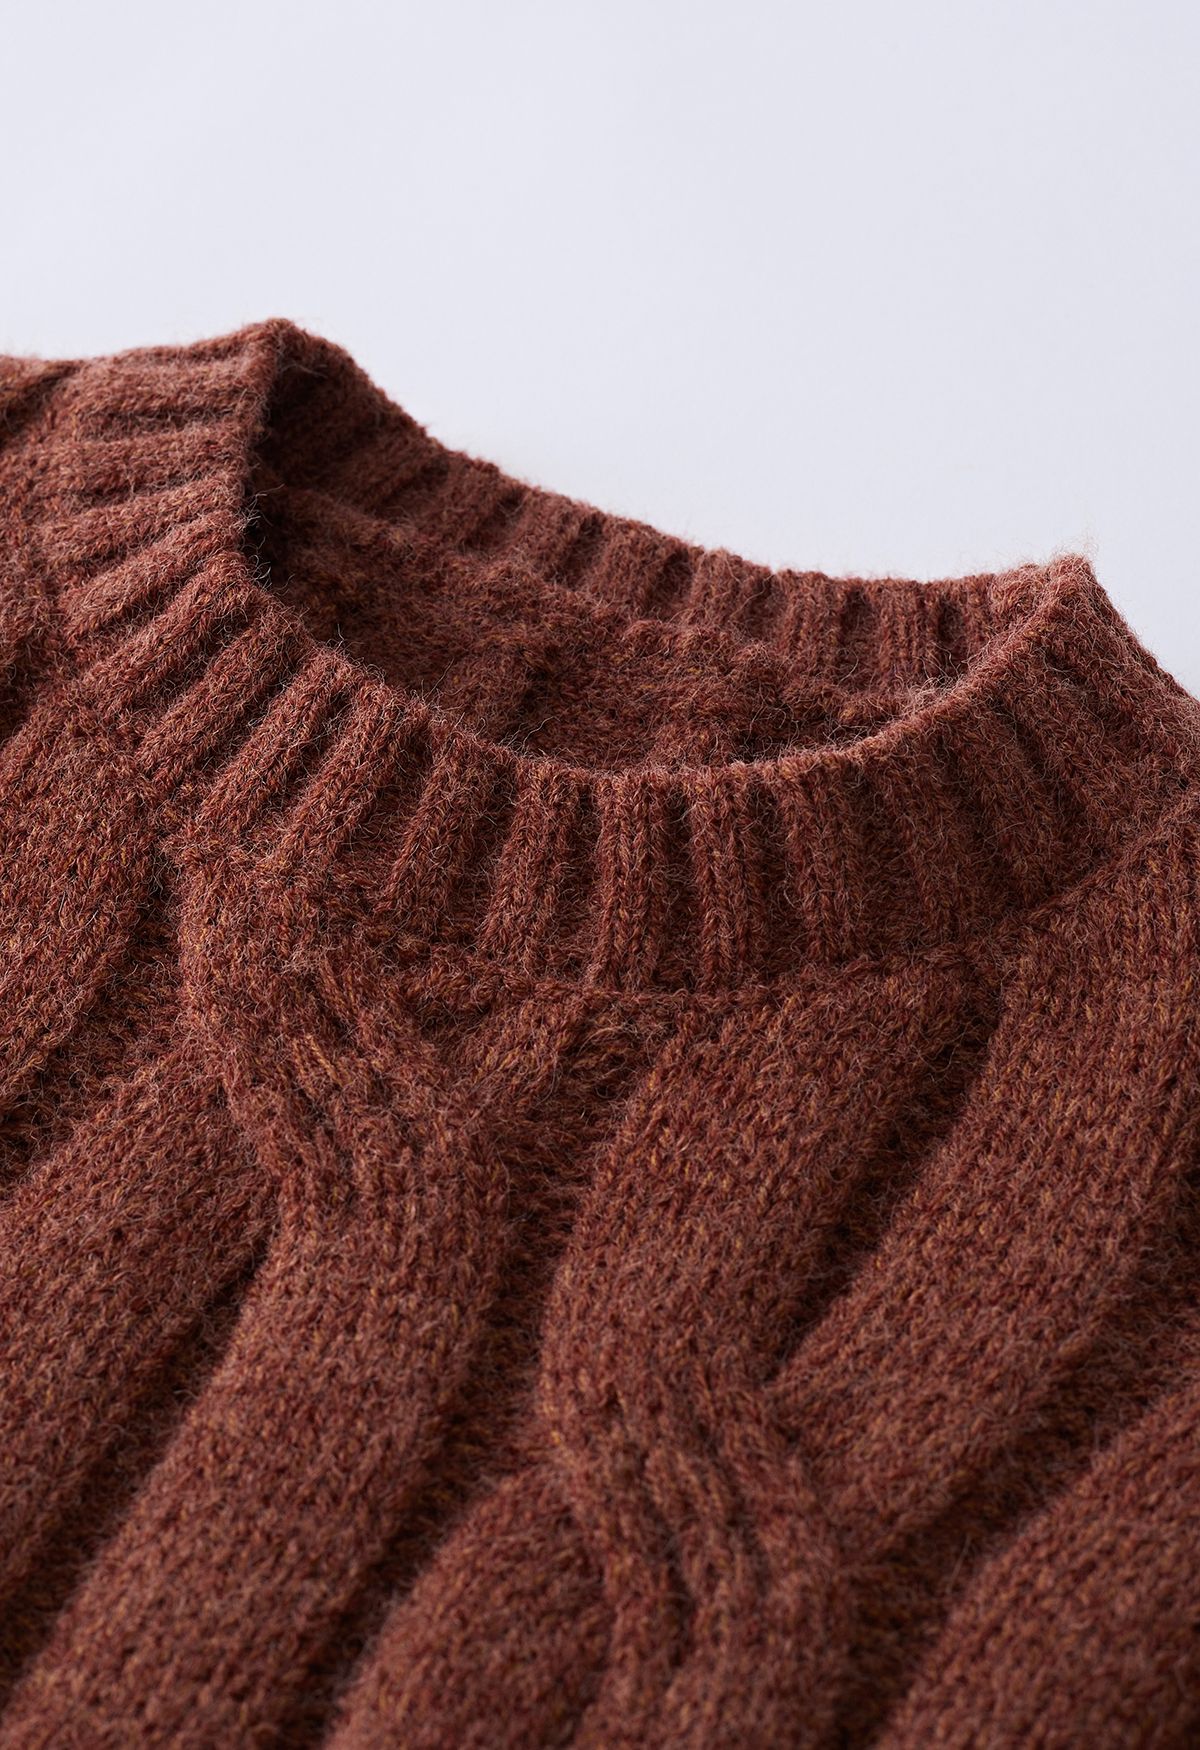 Braid Texture Round Neck Knit Sweater in Rust Red